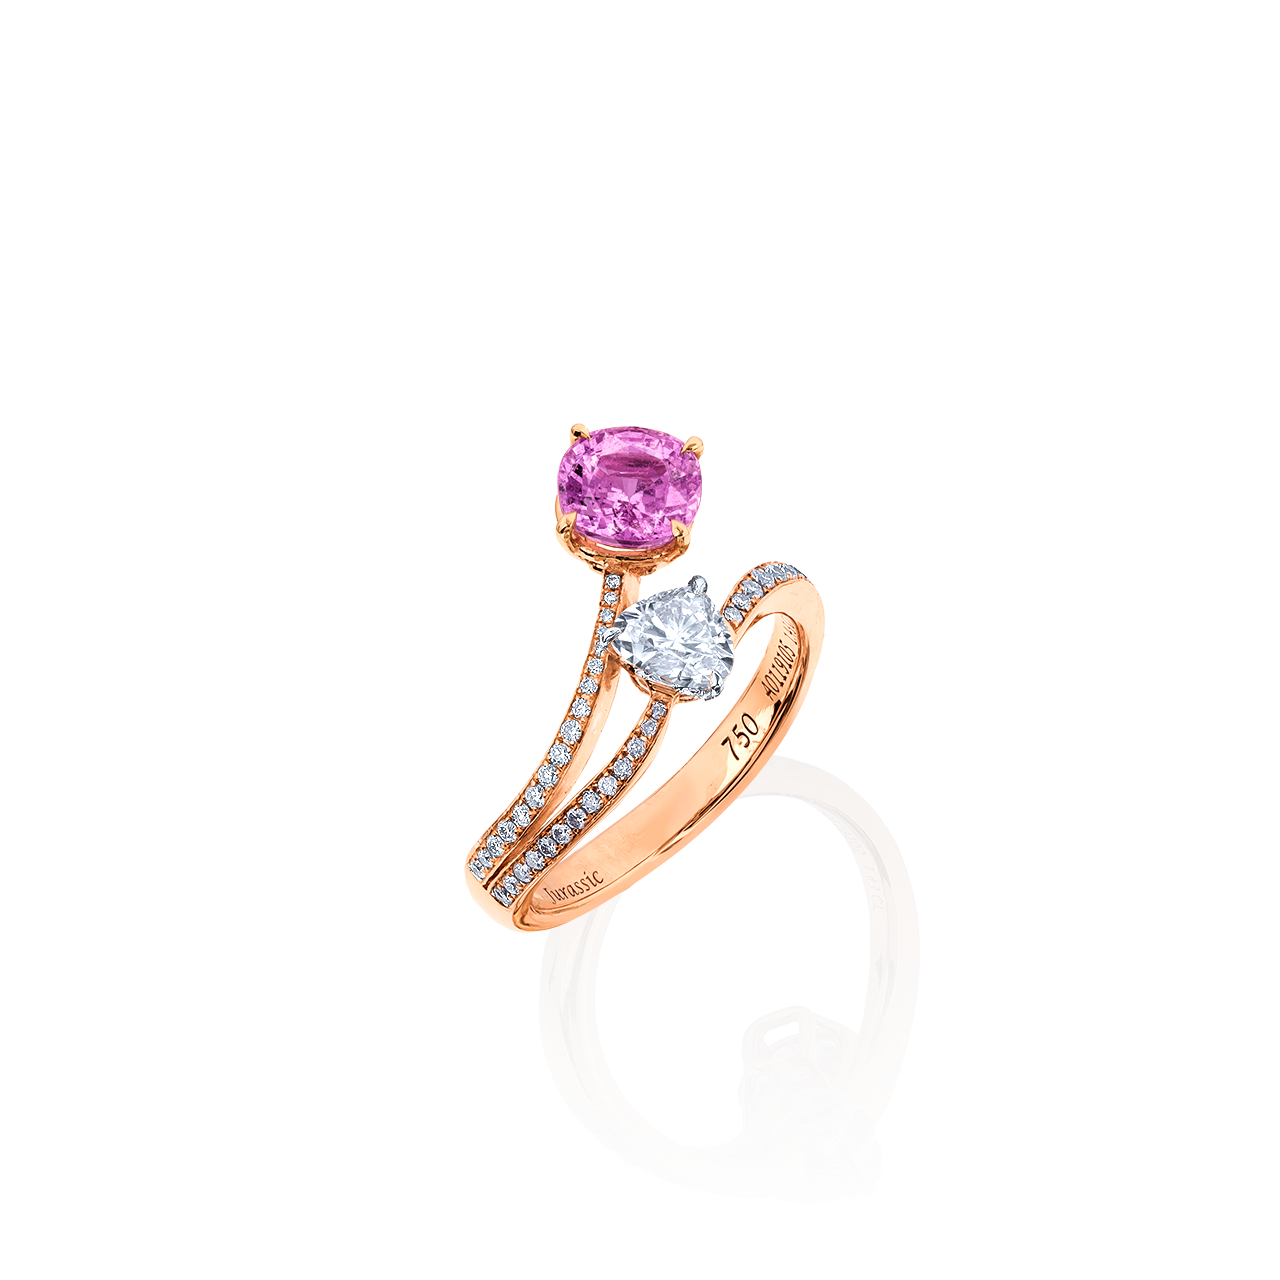 GIA 1.43克拉 粉剛鑽石戒
GIA Pink Sapphire Diamond Ring